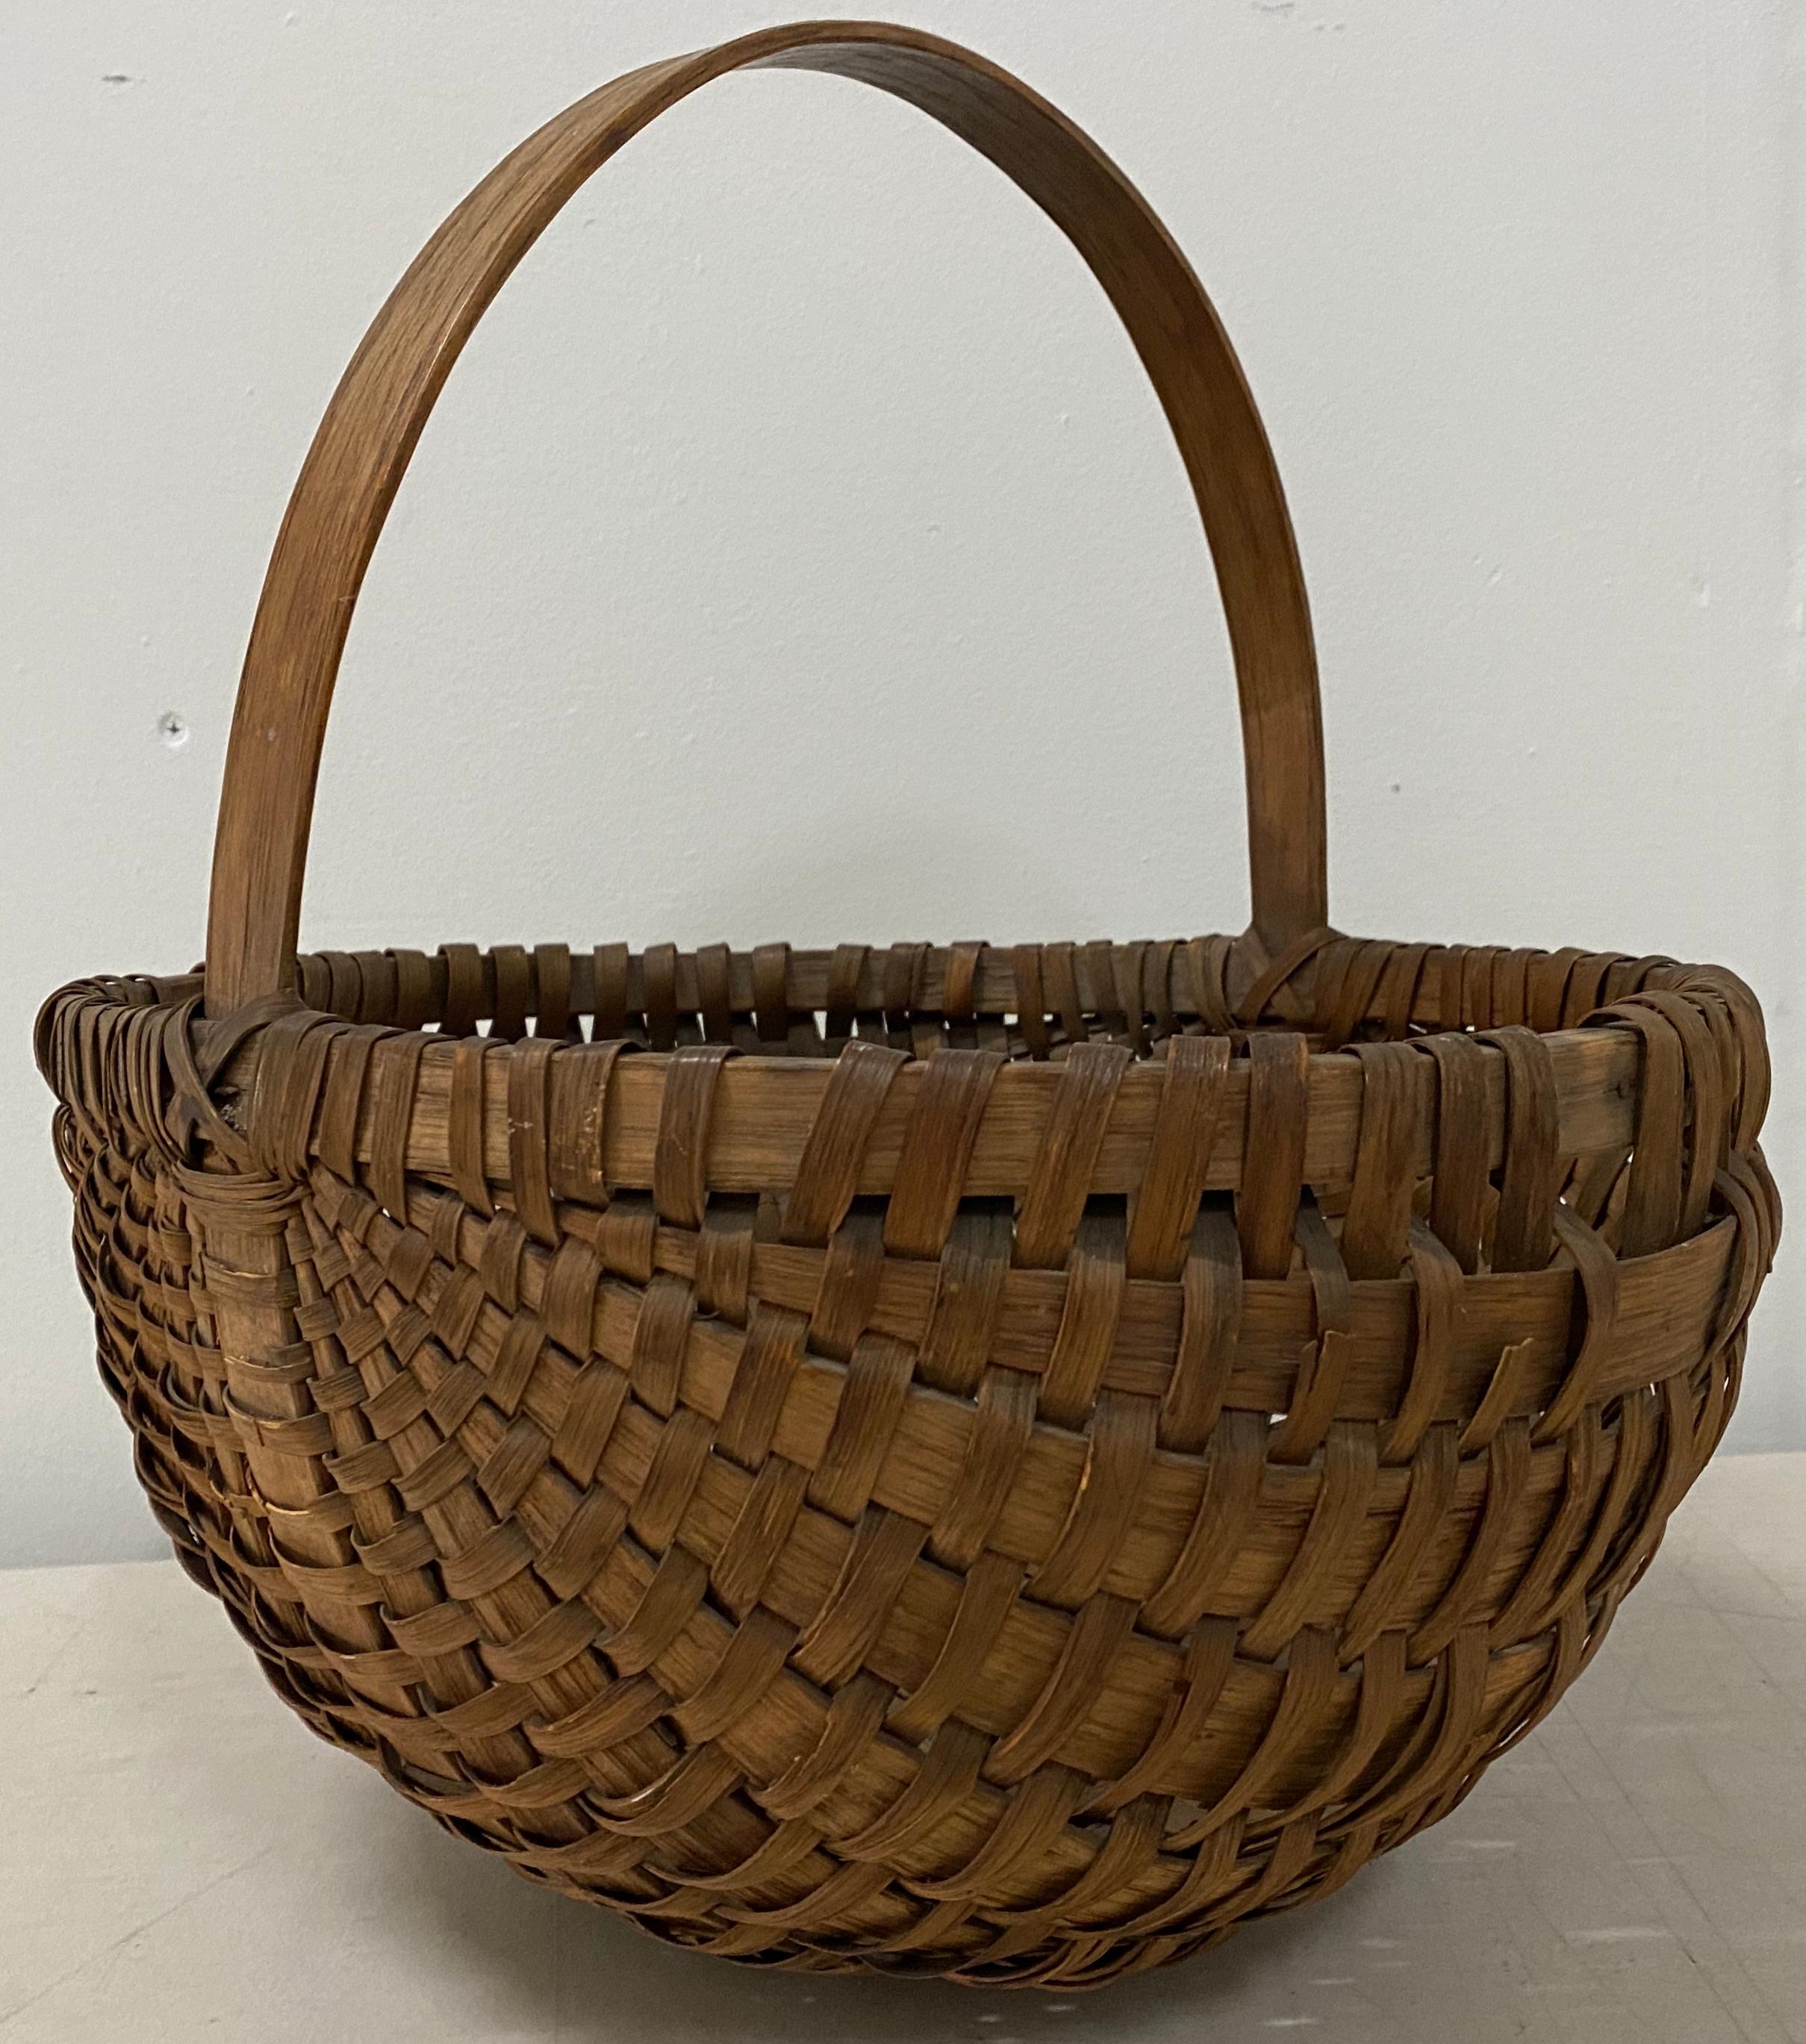 19th century new England splint oak basket

Possibly Massachusetts 

Dimensions 14